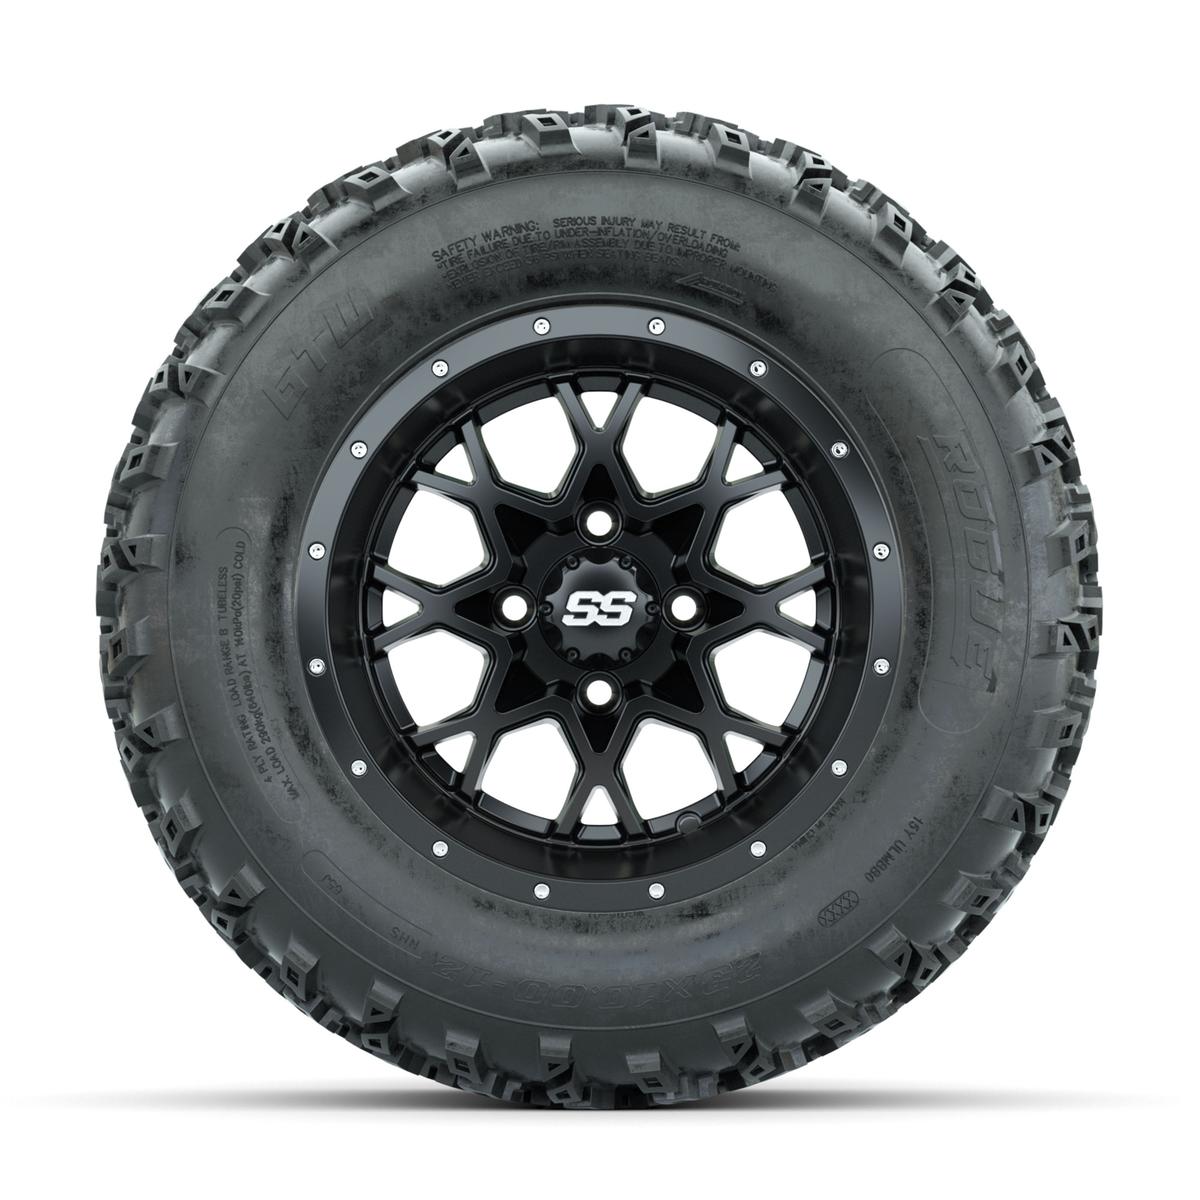 GTW Vortex Matte Black 12 in Wheels with 23x10.00-12 Rogue All Terrain Tires – Full Set